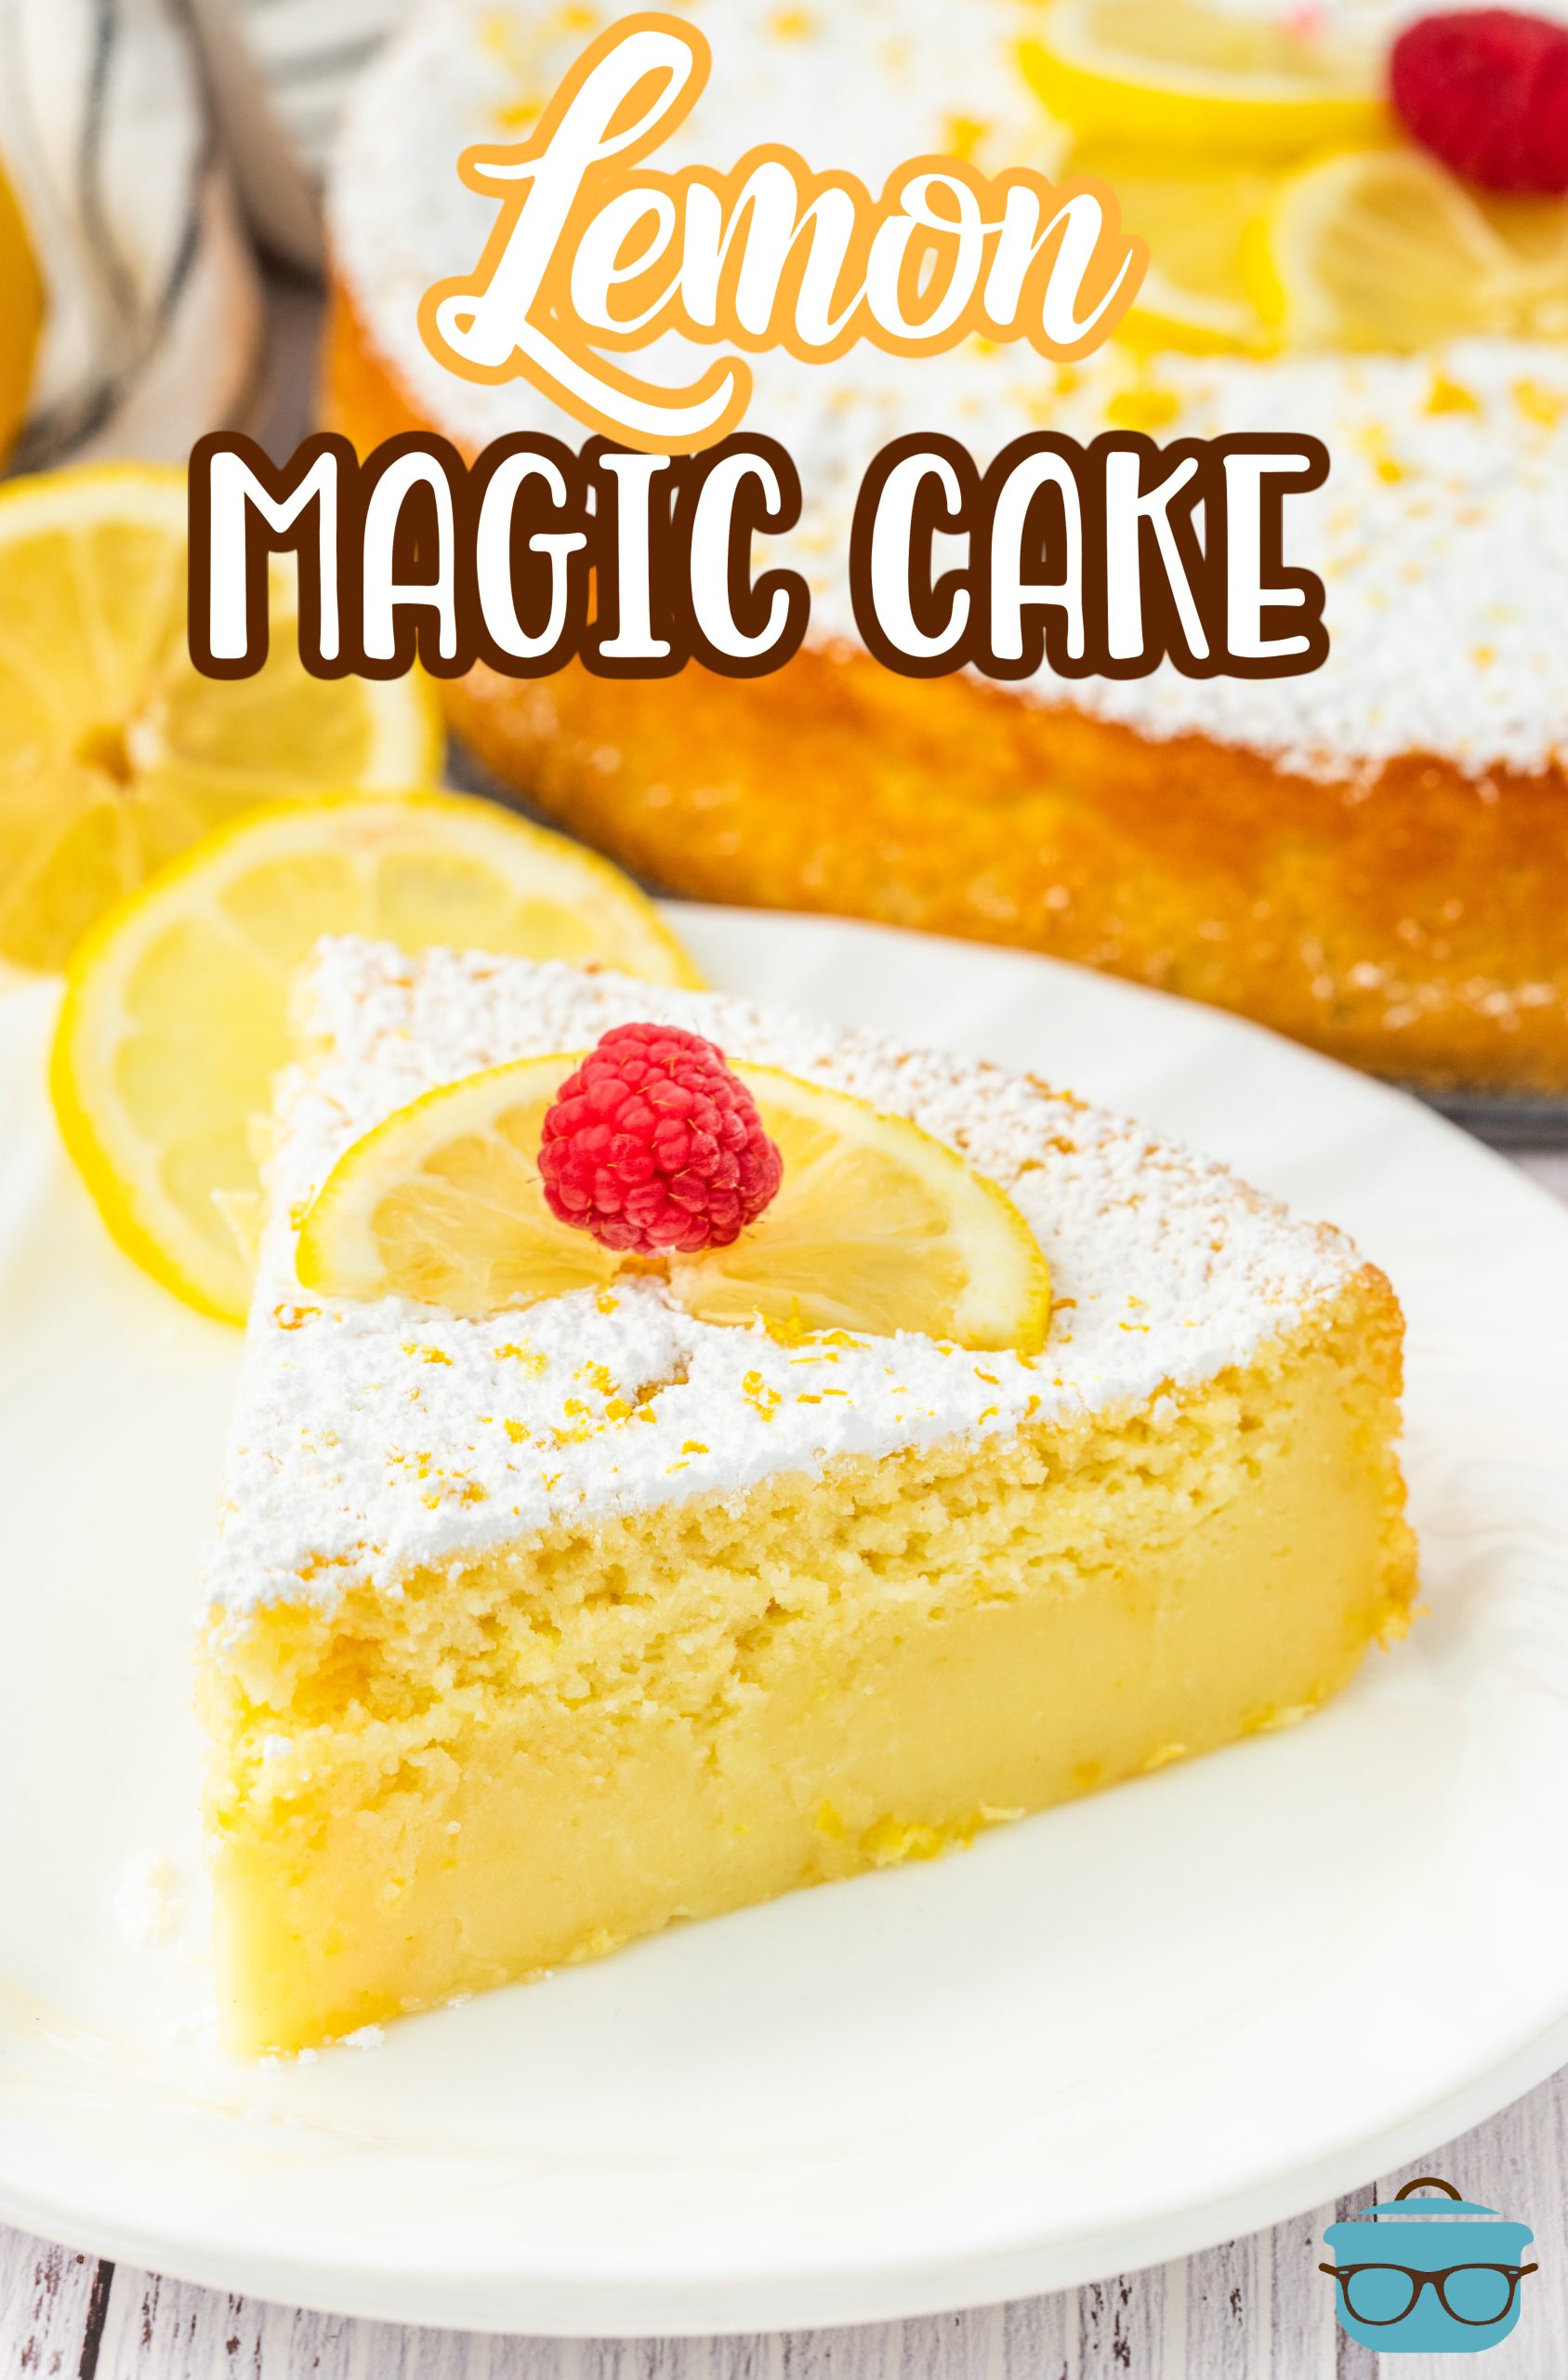 A slice of Lemon Magic Cake on a plate.